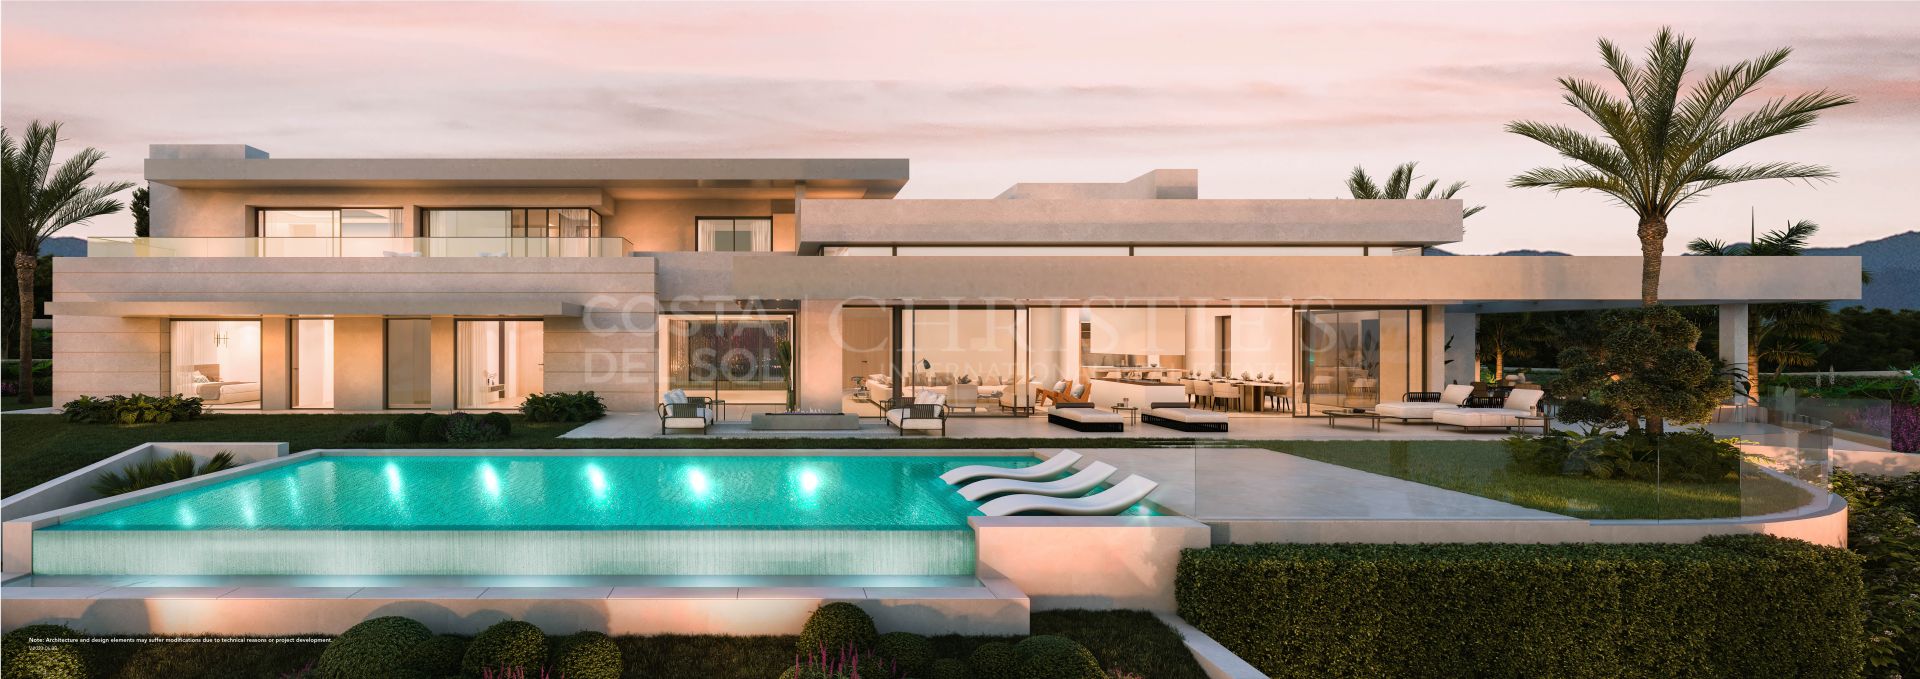 ELIE SAAB RESIDENCES, Sierra Blanca, Marbella Gouden Mijl - Elie Saab-woningen | Christie’s International Real Estate